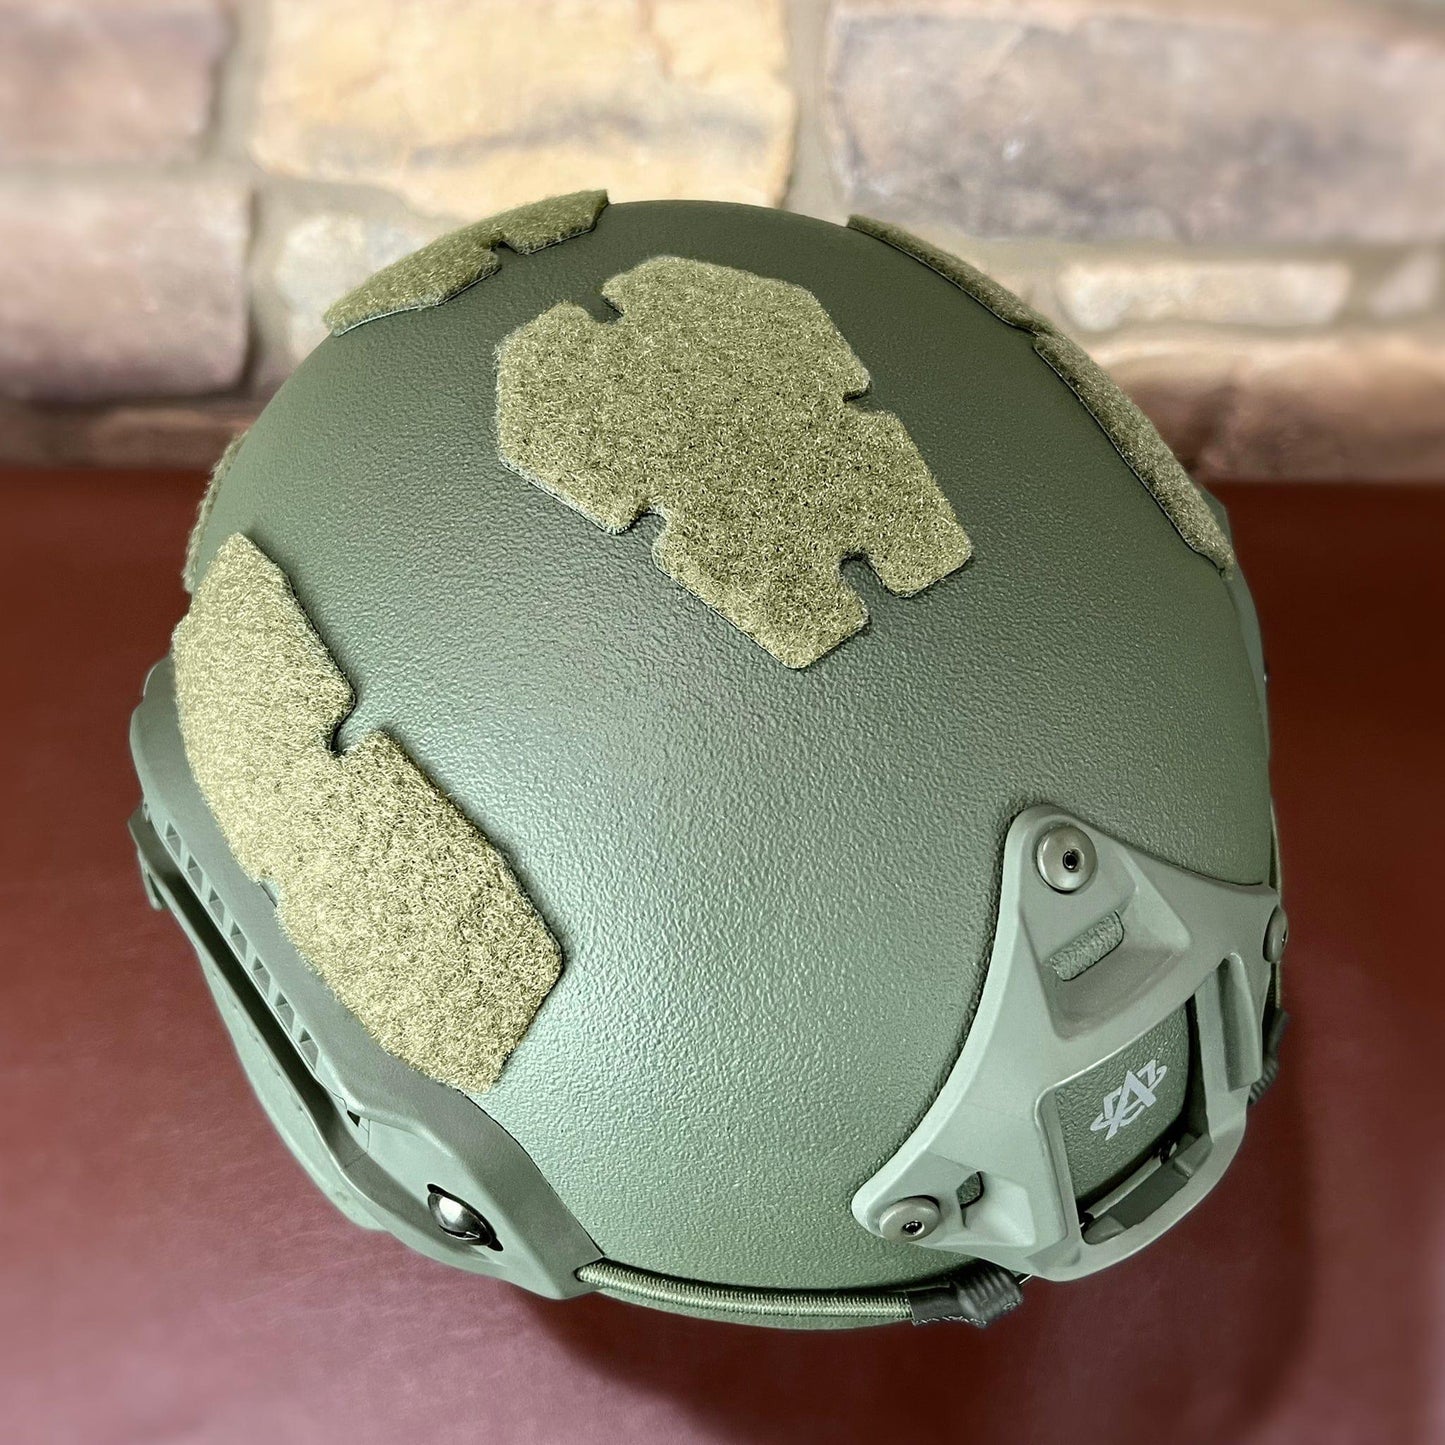 MICH/ACH Ballistic Helmet | NIJ Level IIIA+